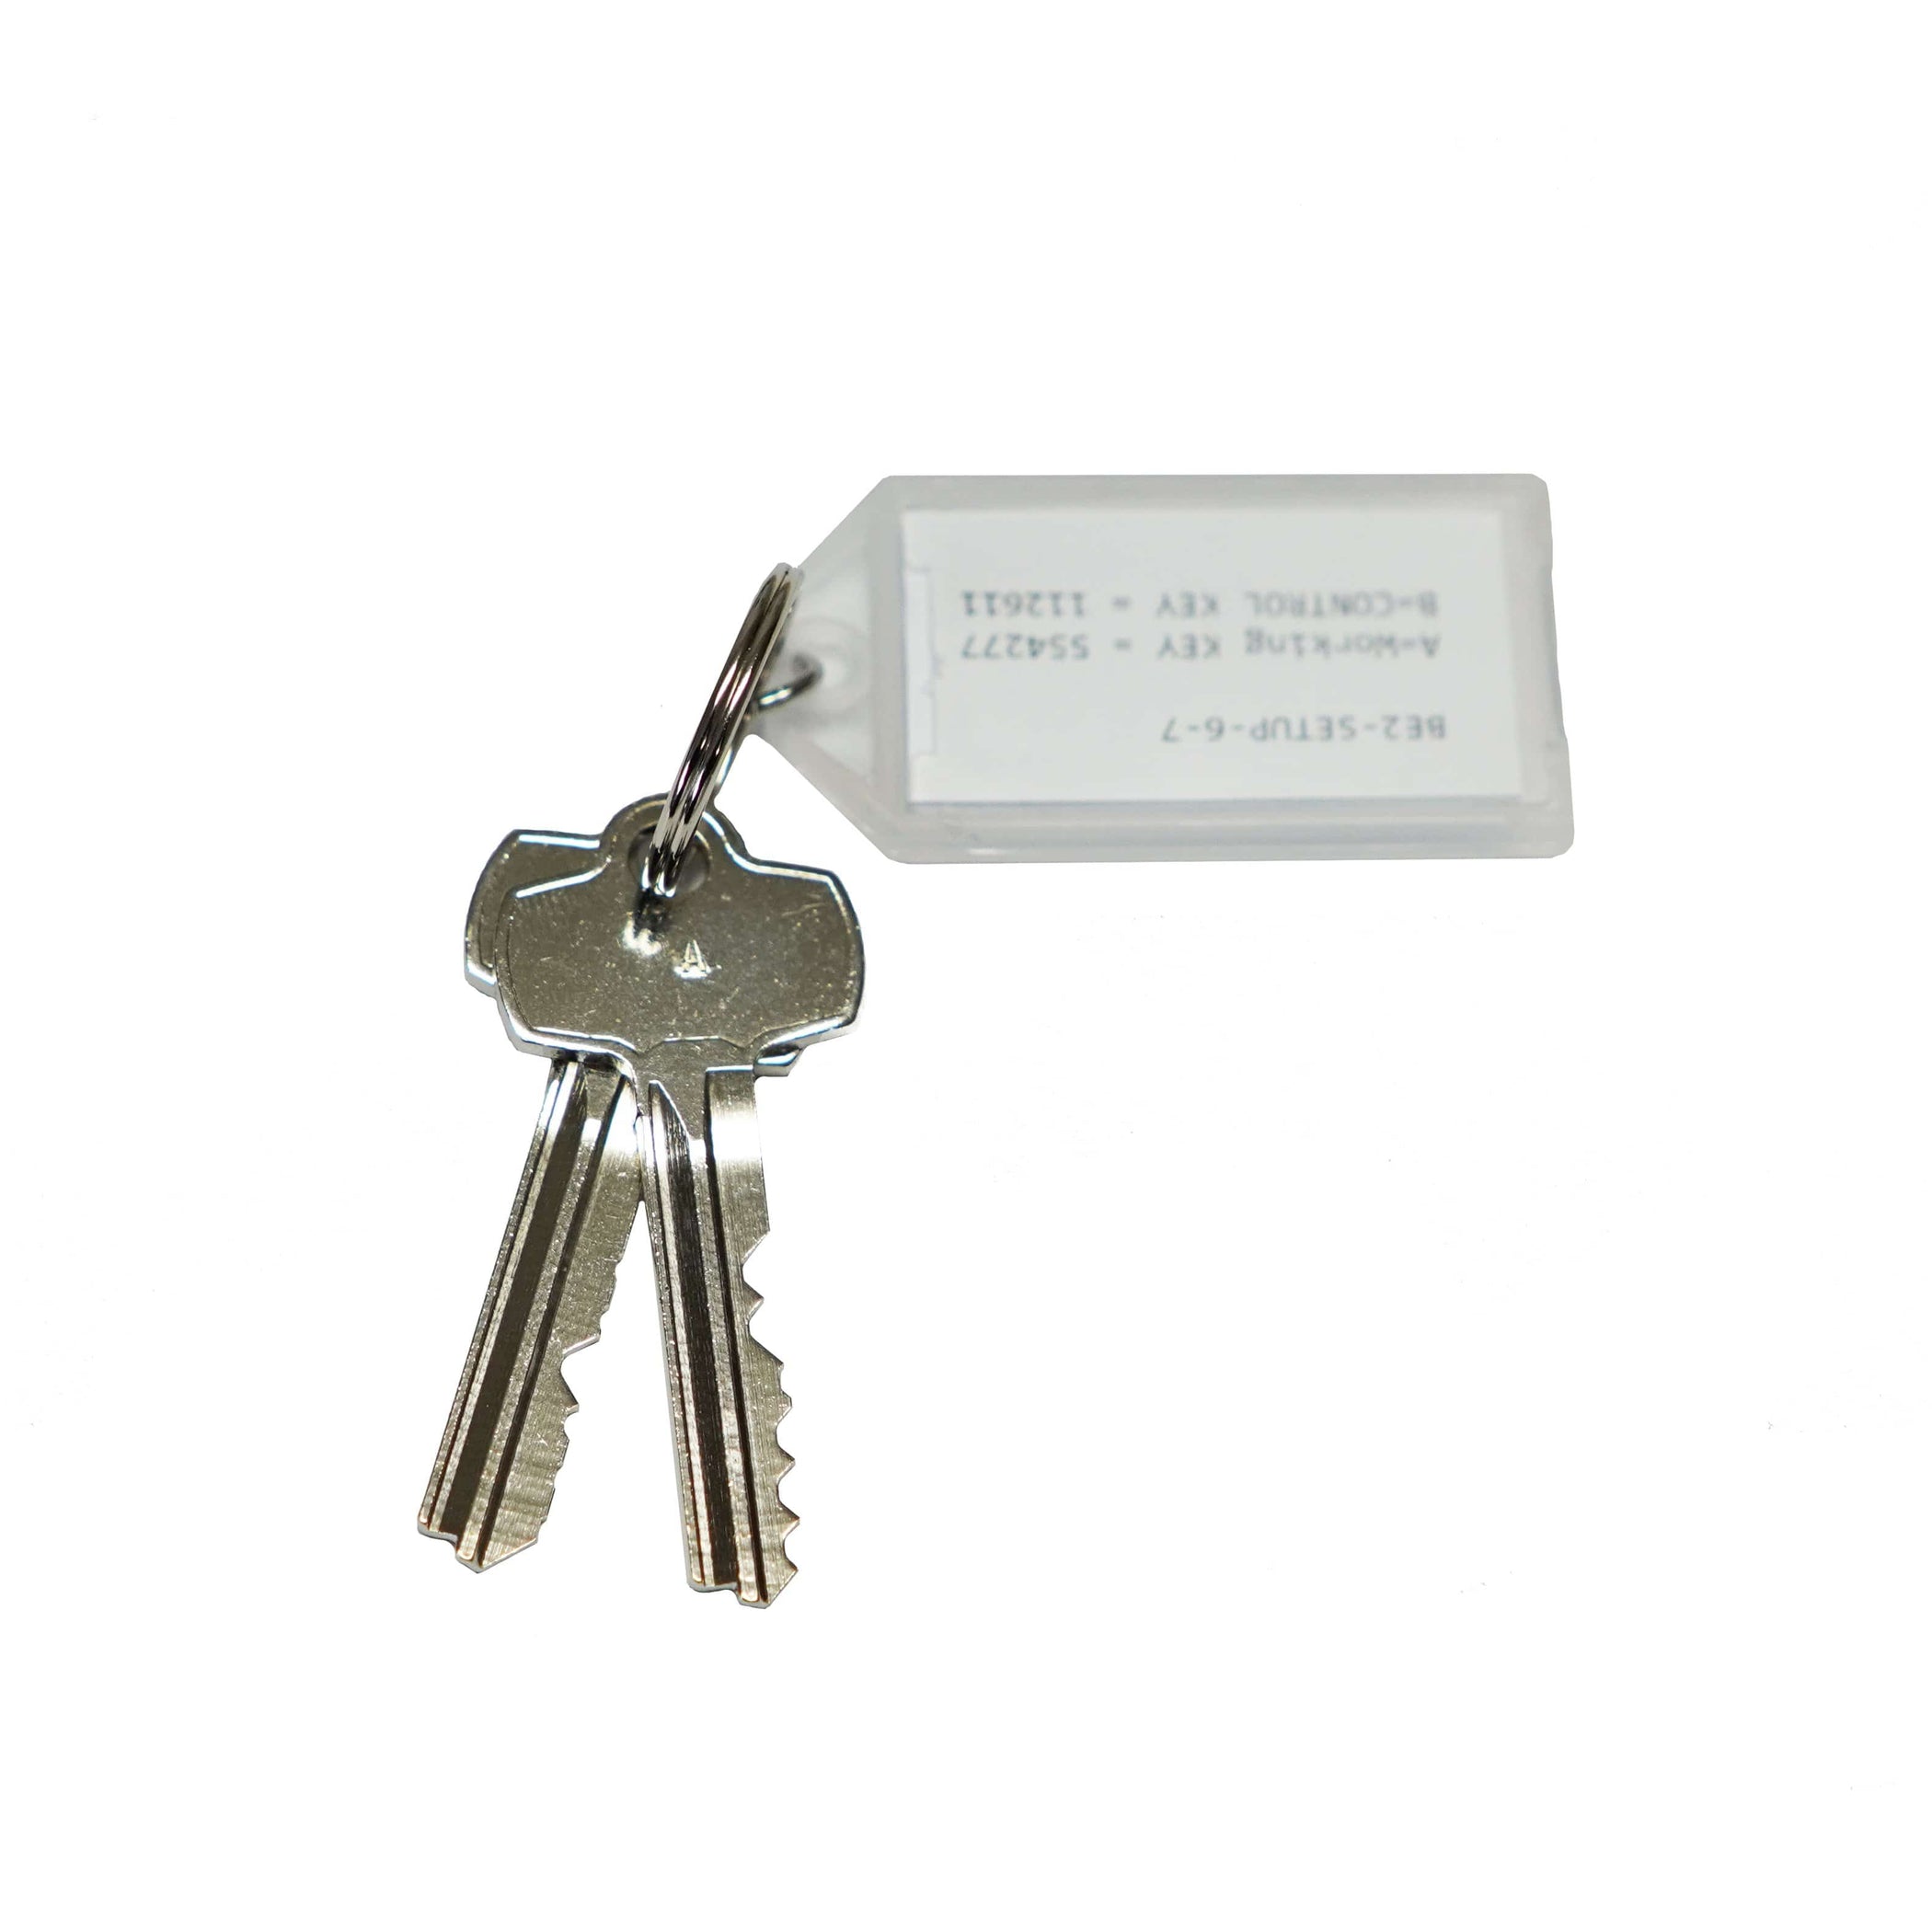 Sfic A2 6 Pin Setup Keys With Pinning Chart 